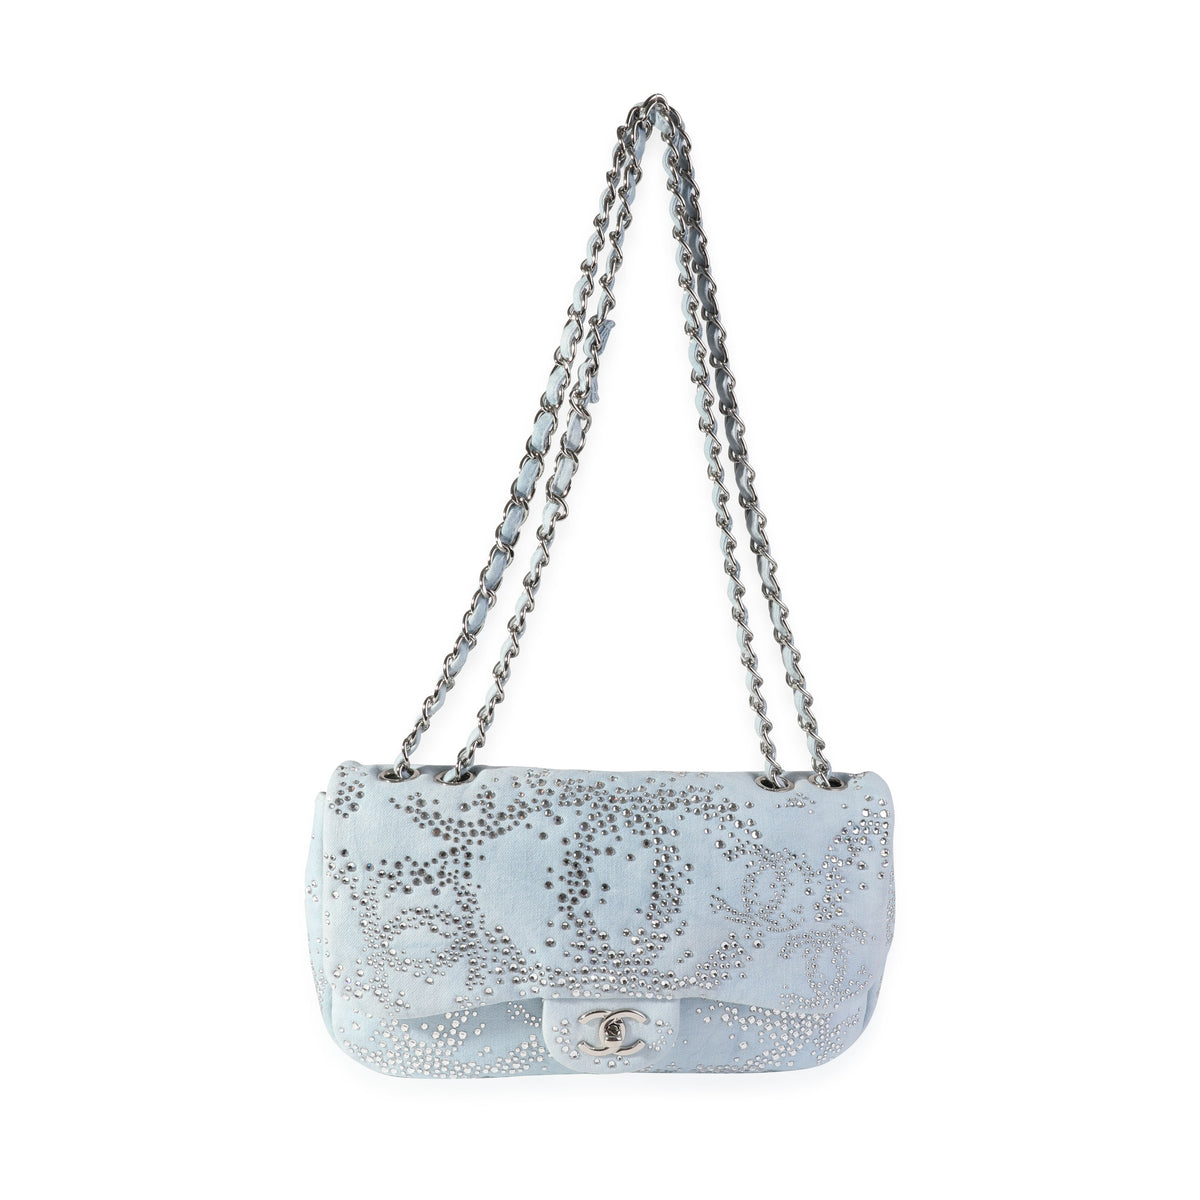 Chanel Swarovski Crystal Flap Bag